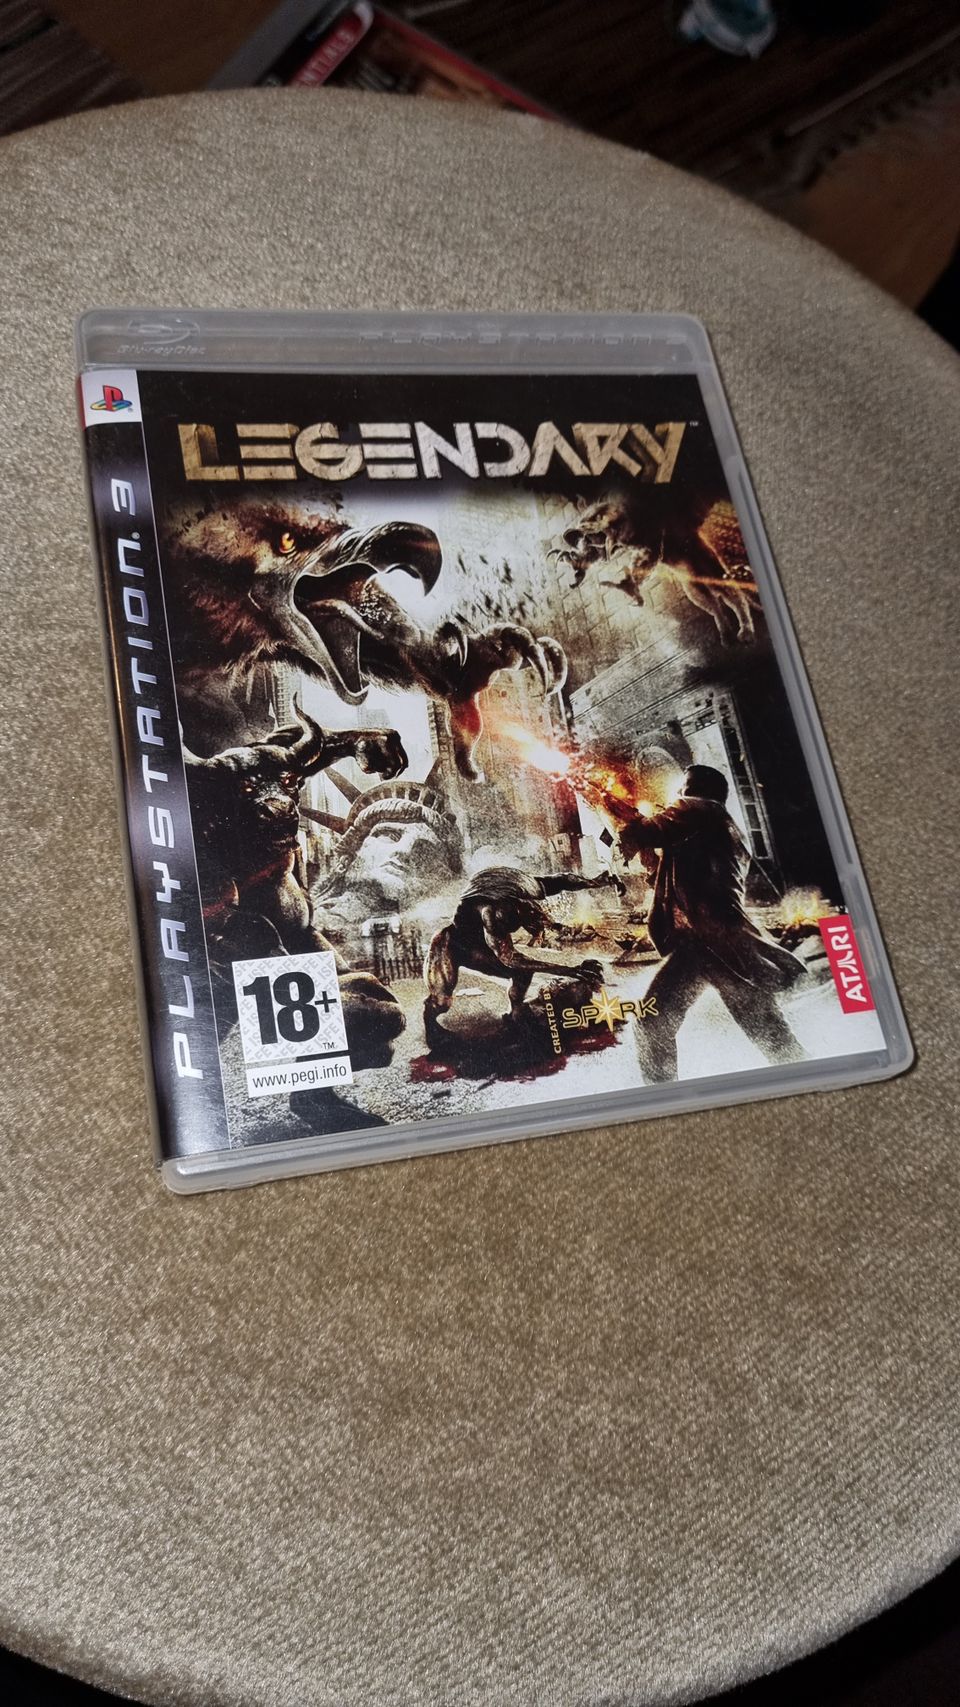 PS3/Playstation 3: Legendary